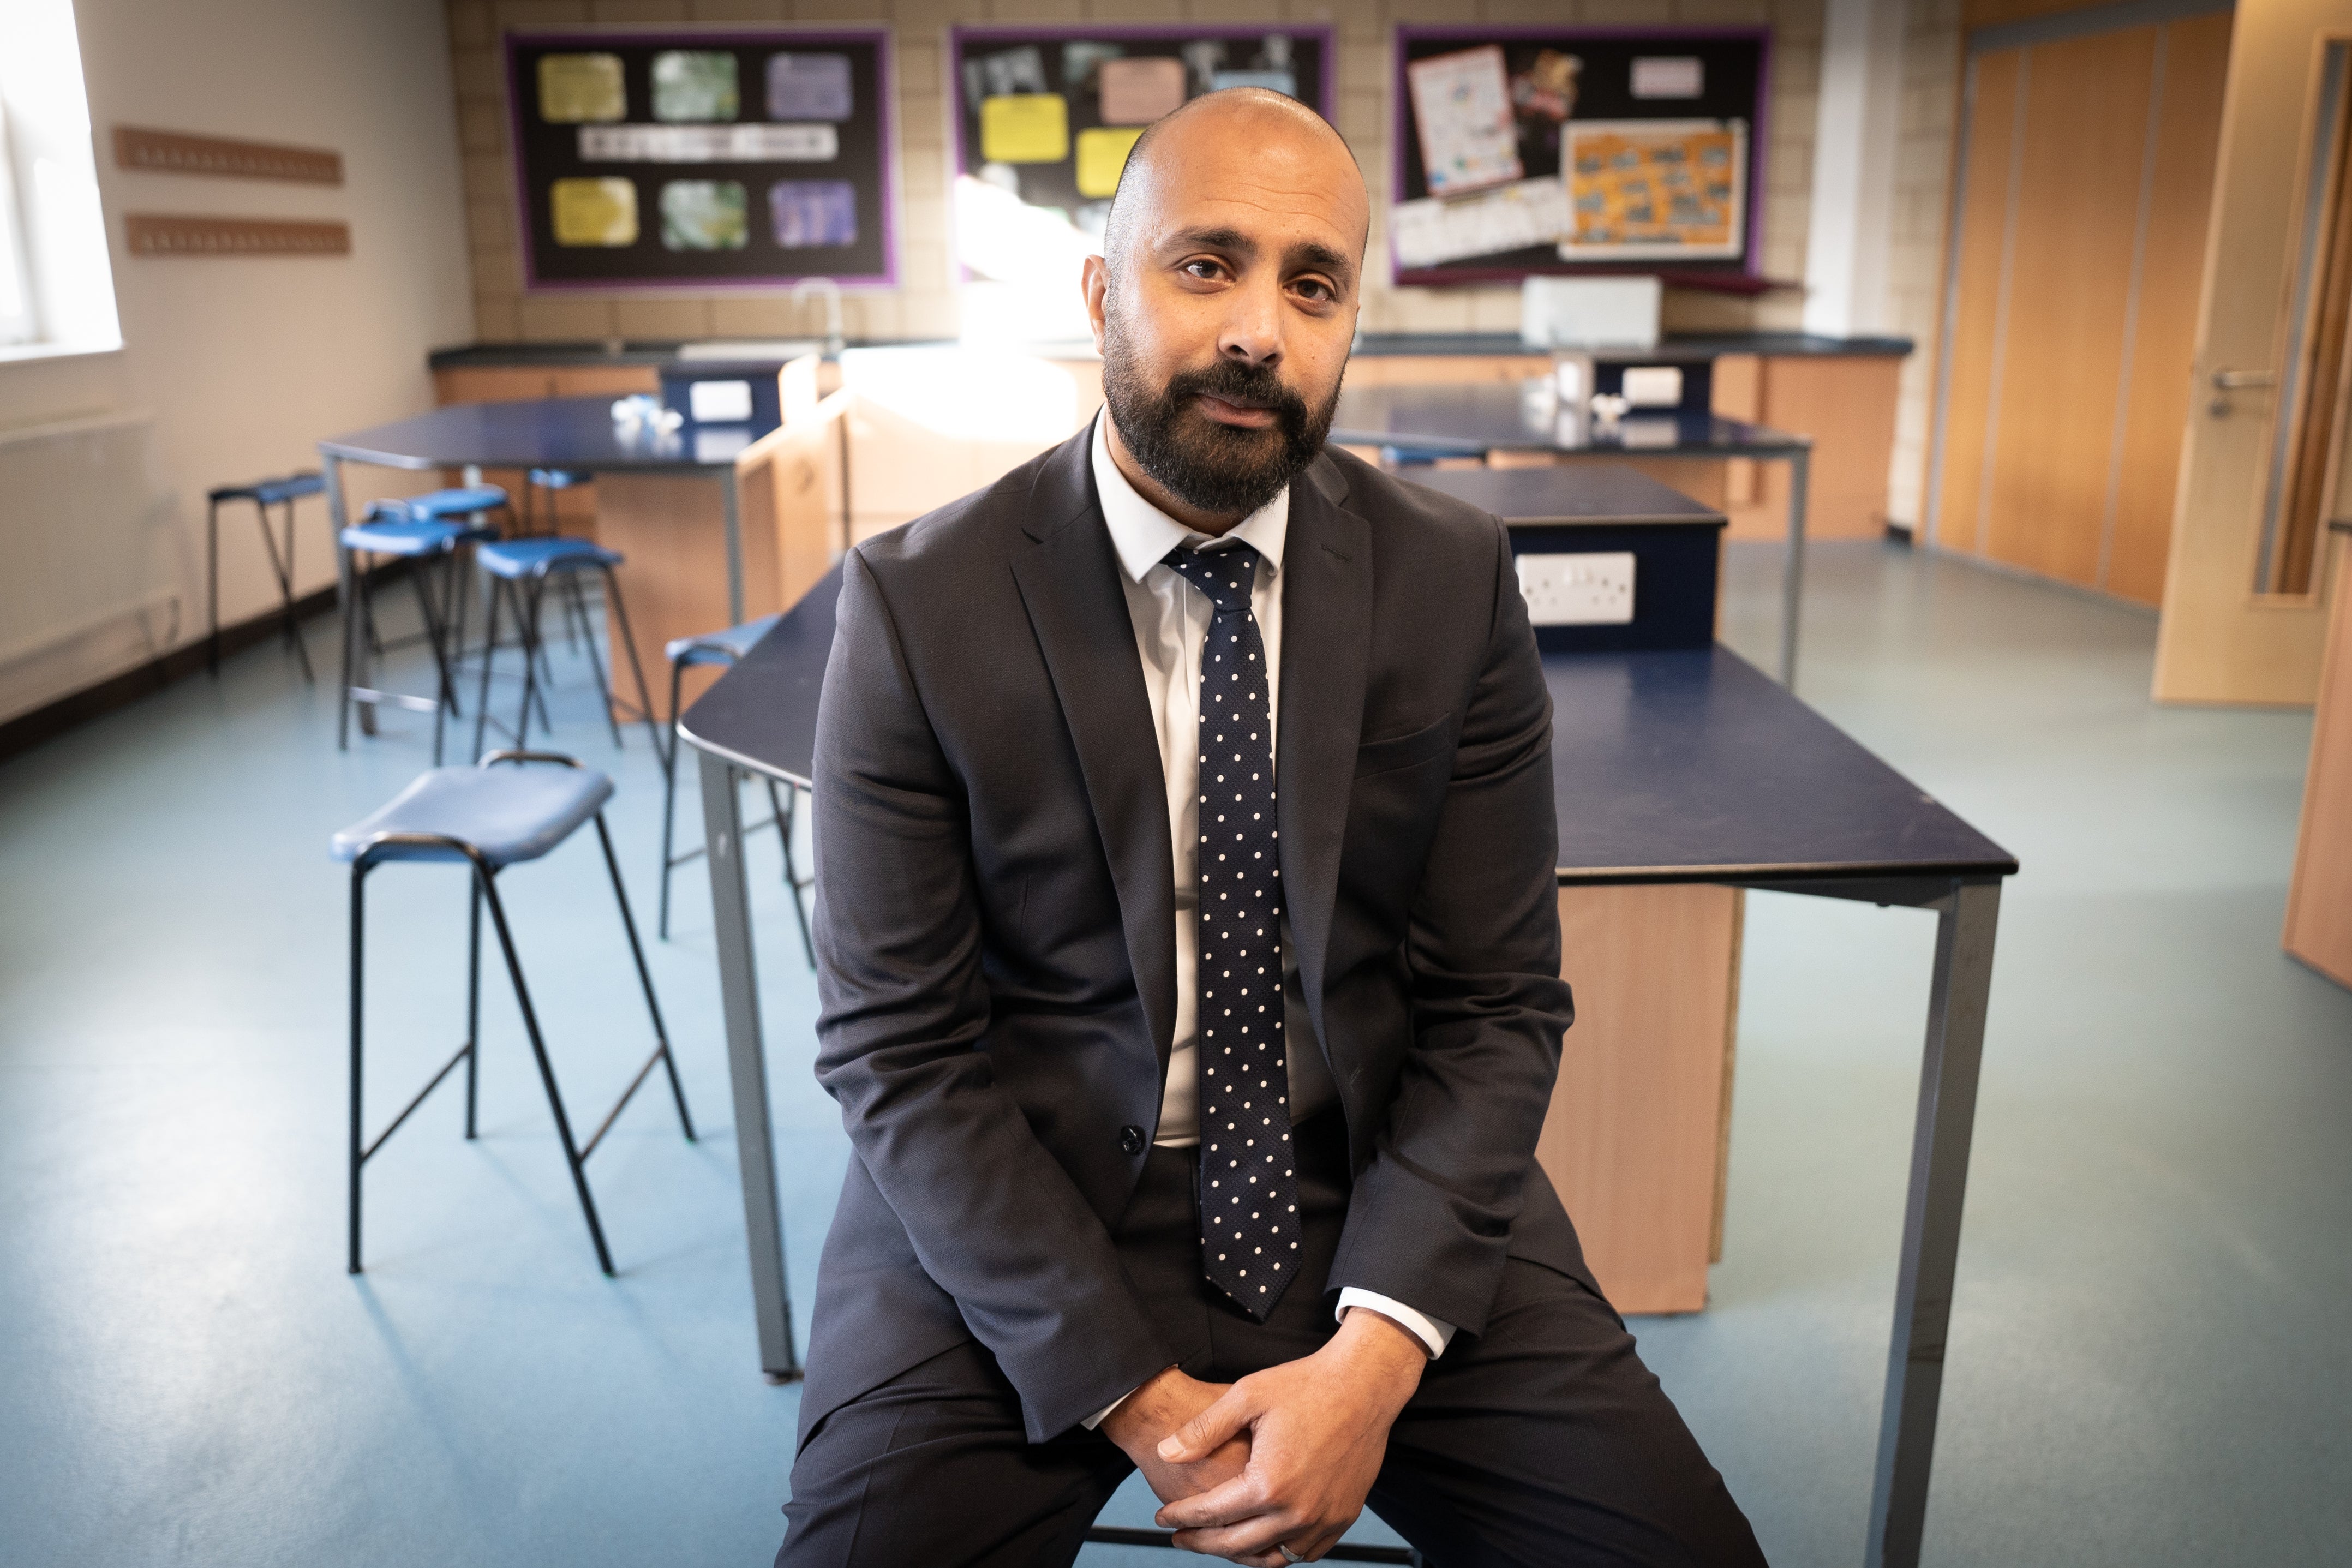 Headteacher Saqib Chaudhri at Oasis Academy in Croydon, south London (Stefan Rousseau/PA)